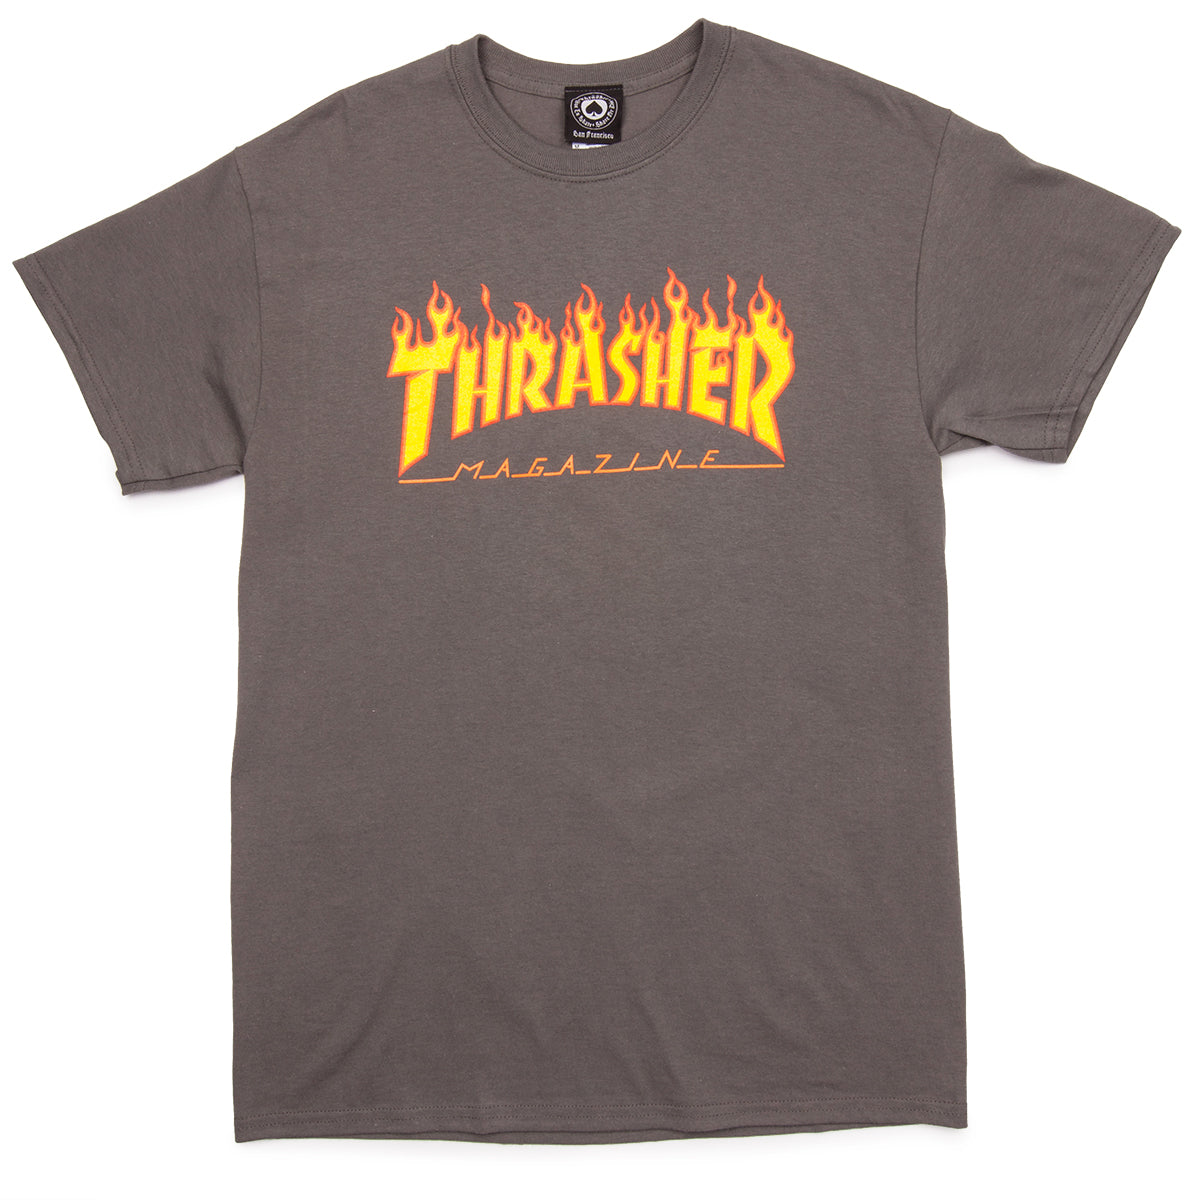 Thrasher Flame T-Shirt - Charcoal image 1